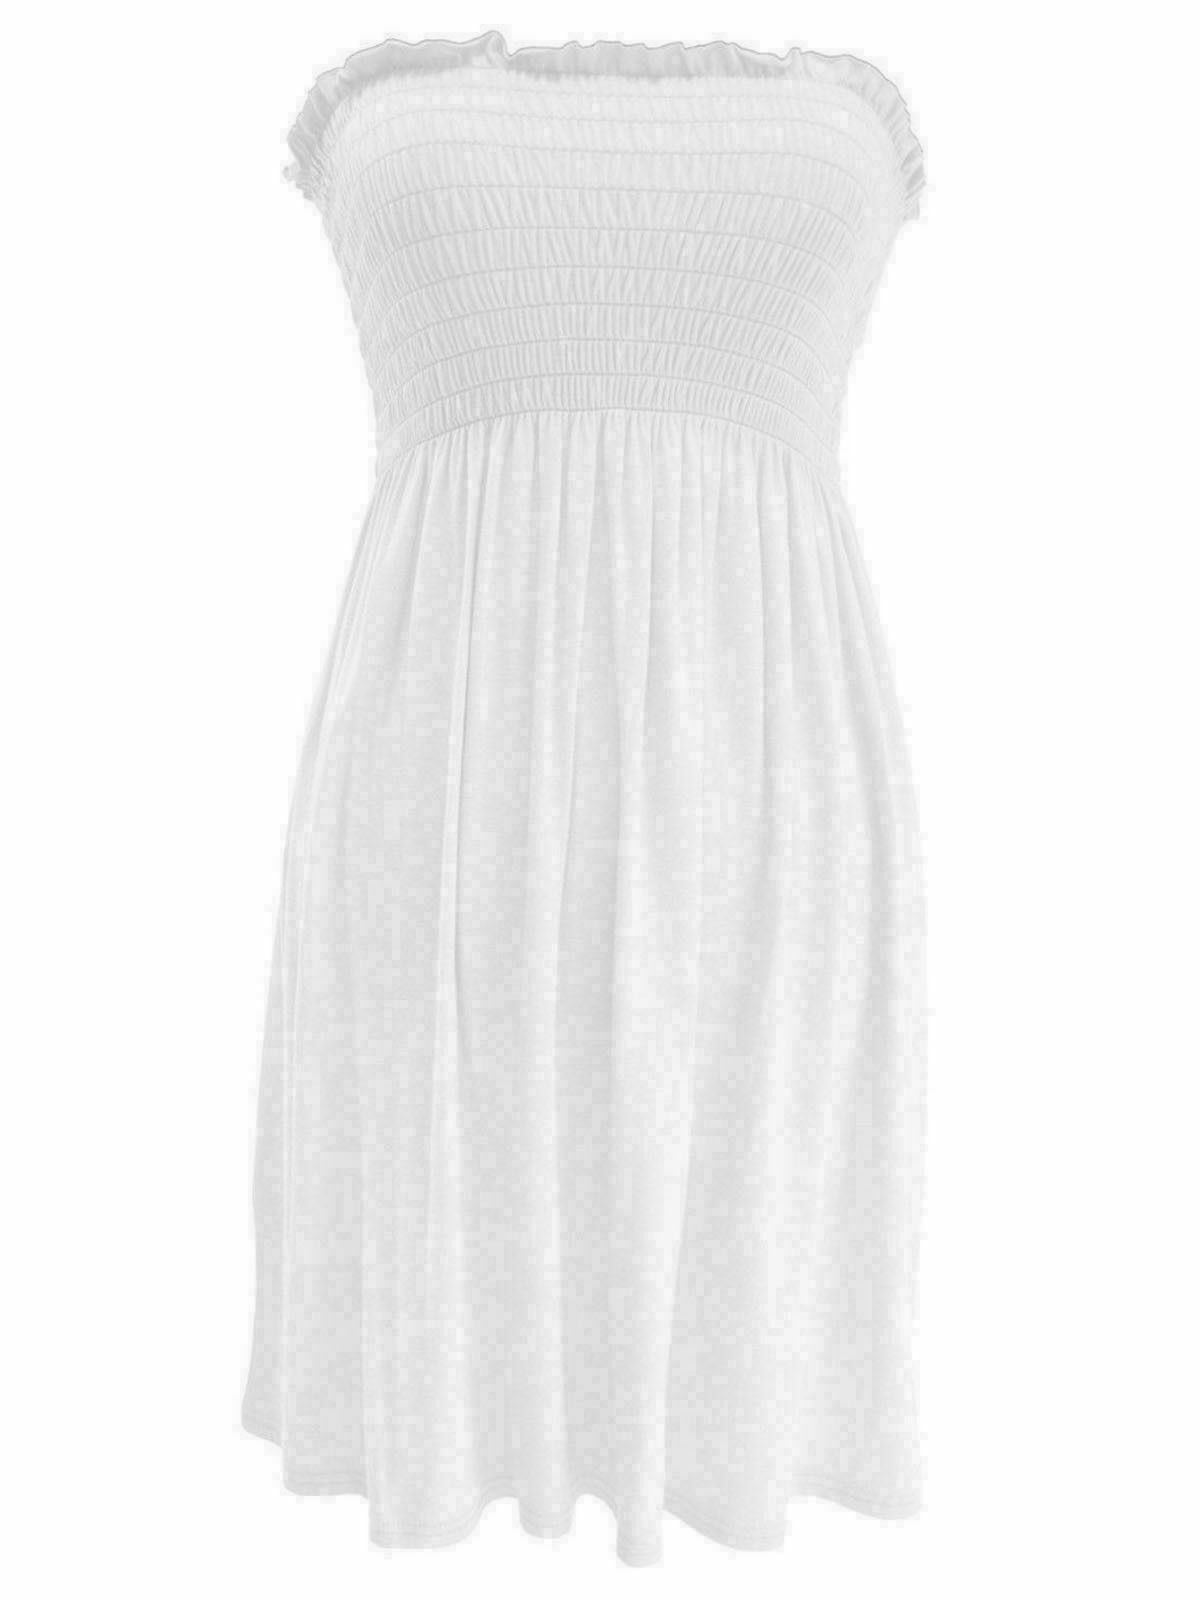 Ladies Plain White Boob Tube Short Style Dress.